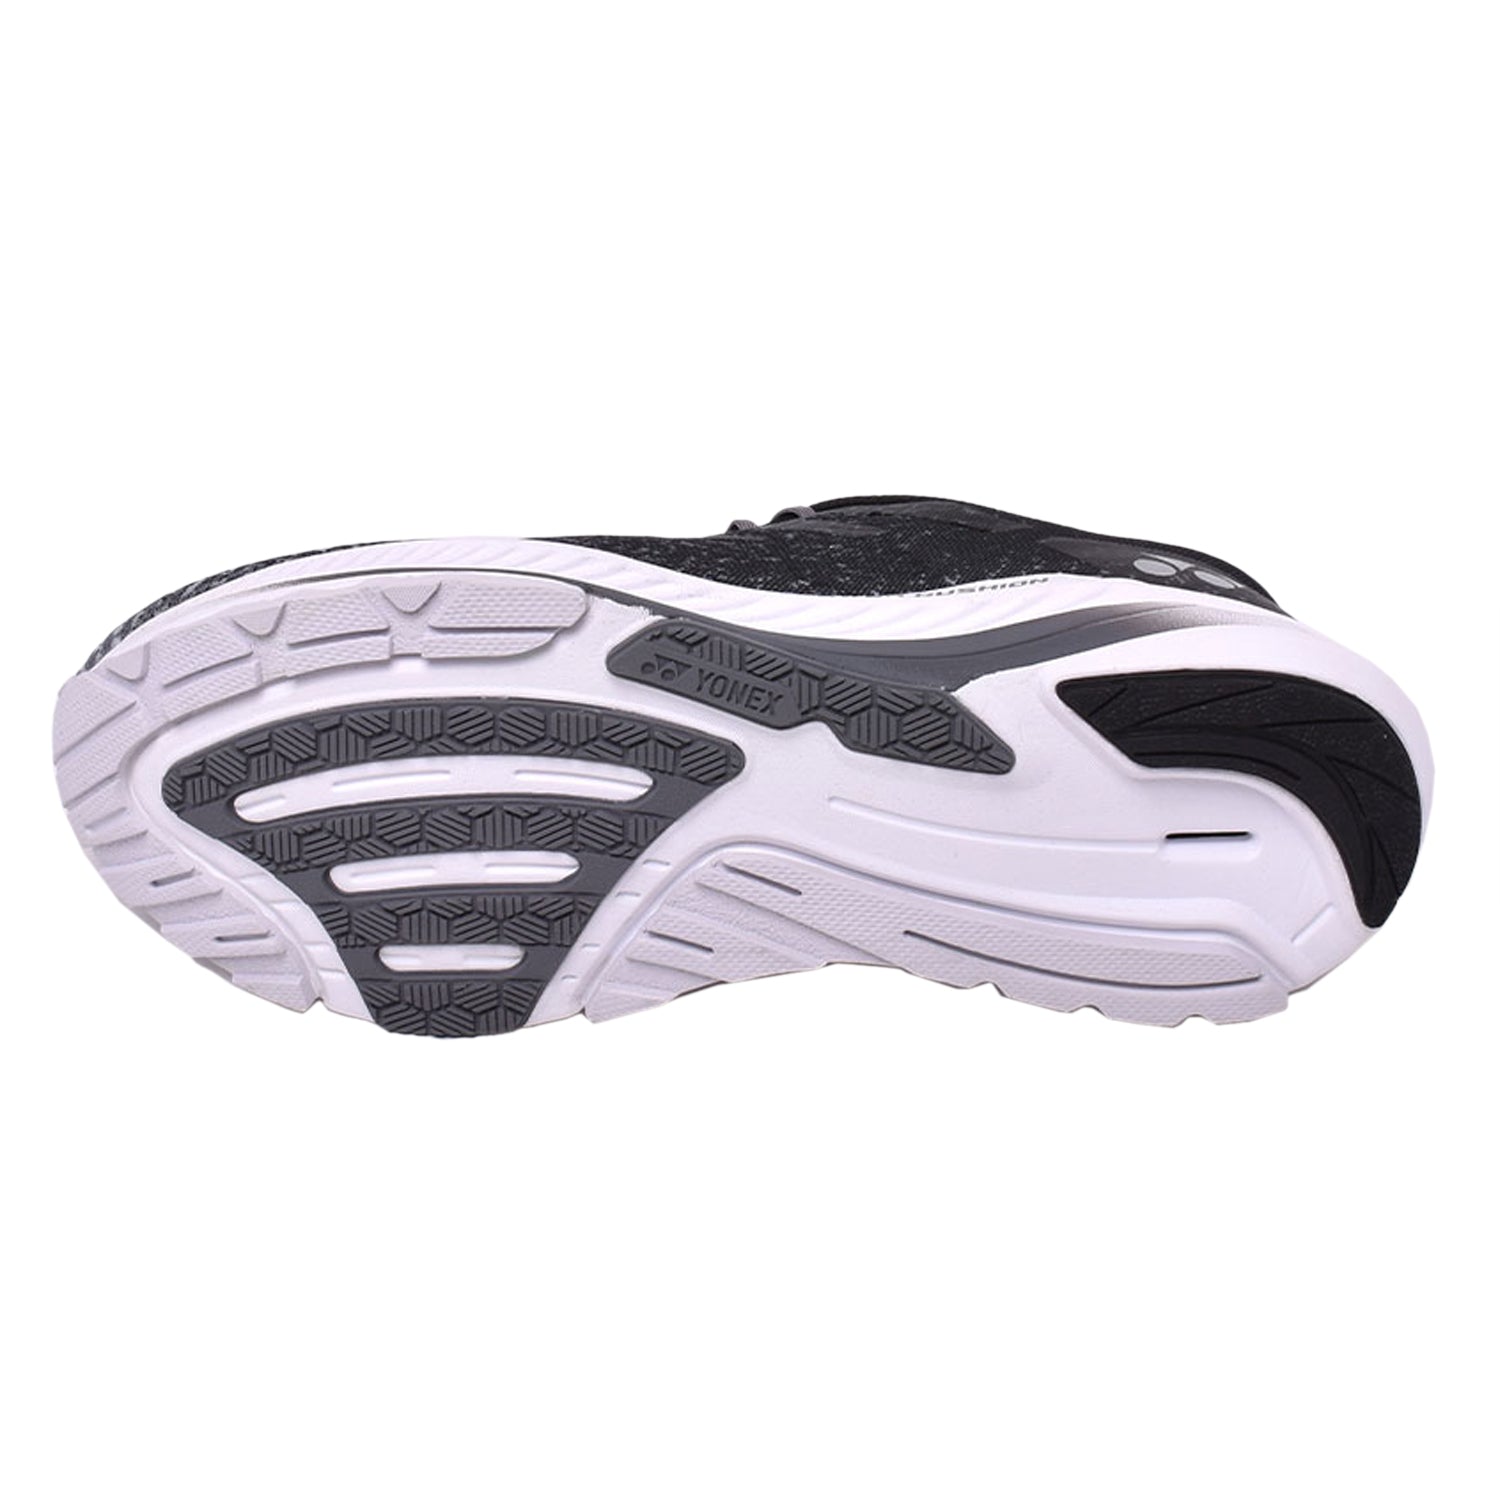 Yonex SafeRun Aerus Men Running Shoes , Black/Gray - Best Price online Prokicksports.com